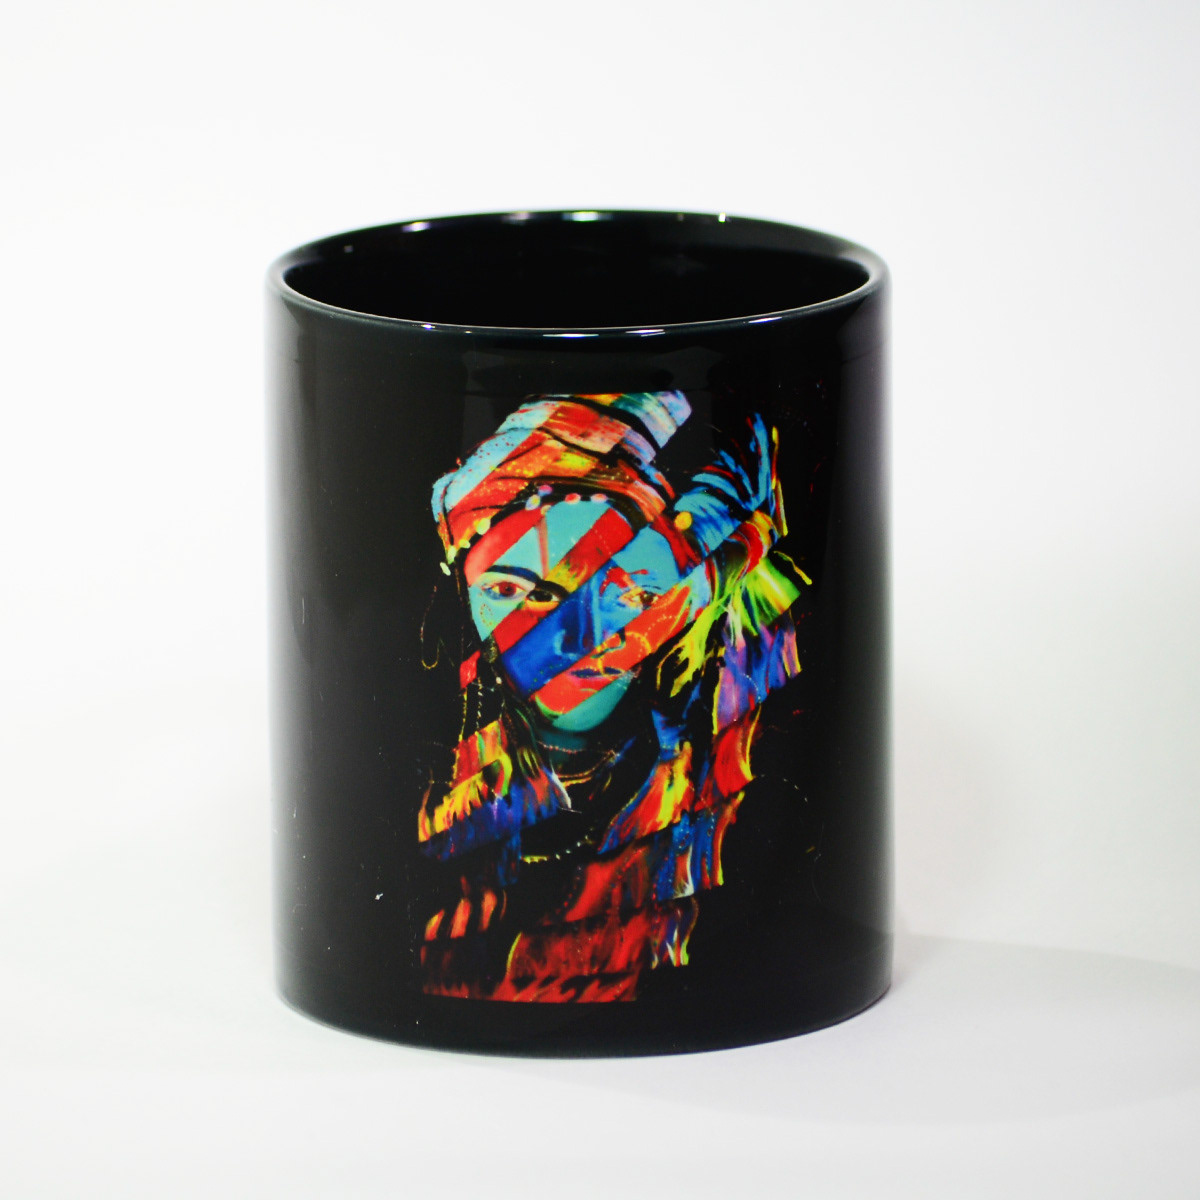 acrylic art design ceramic Mugs psy SAMEER hazari